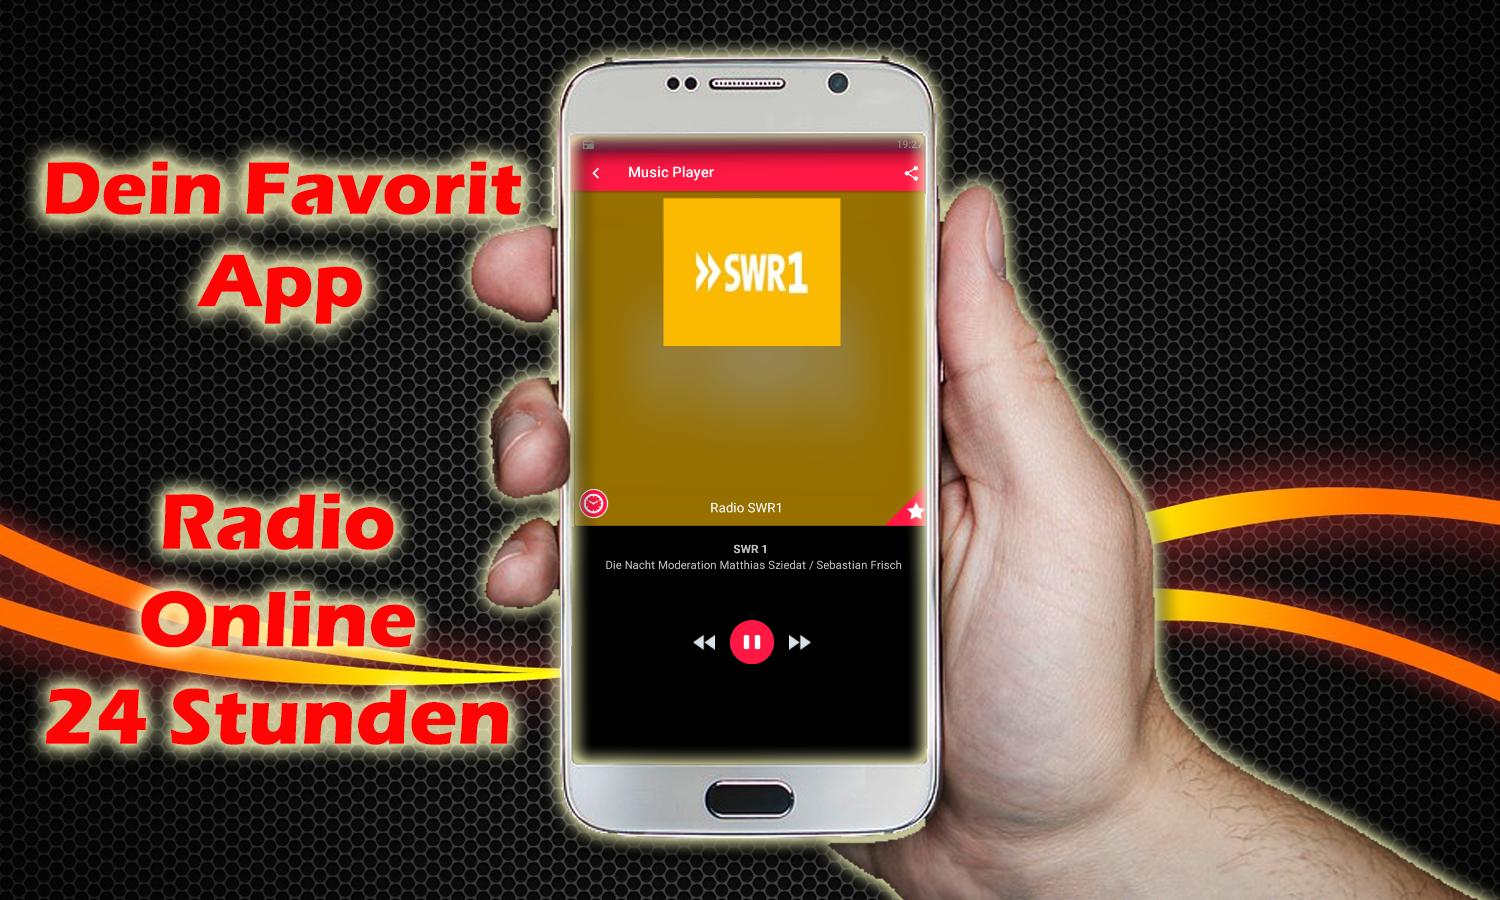 SWR1 Radio Deutschland Webradio SWR1 Livestream for Android - APK Download